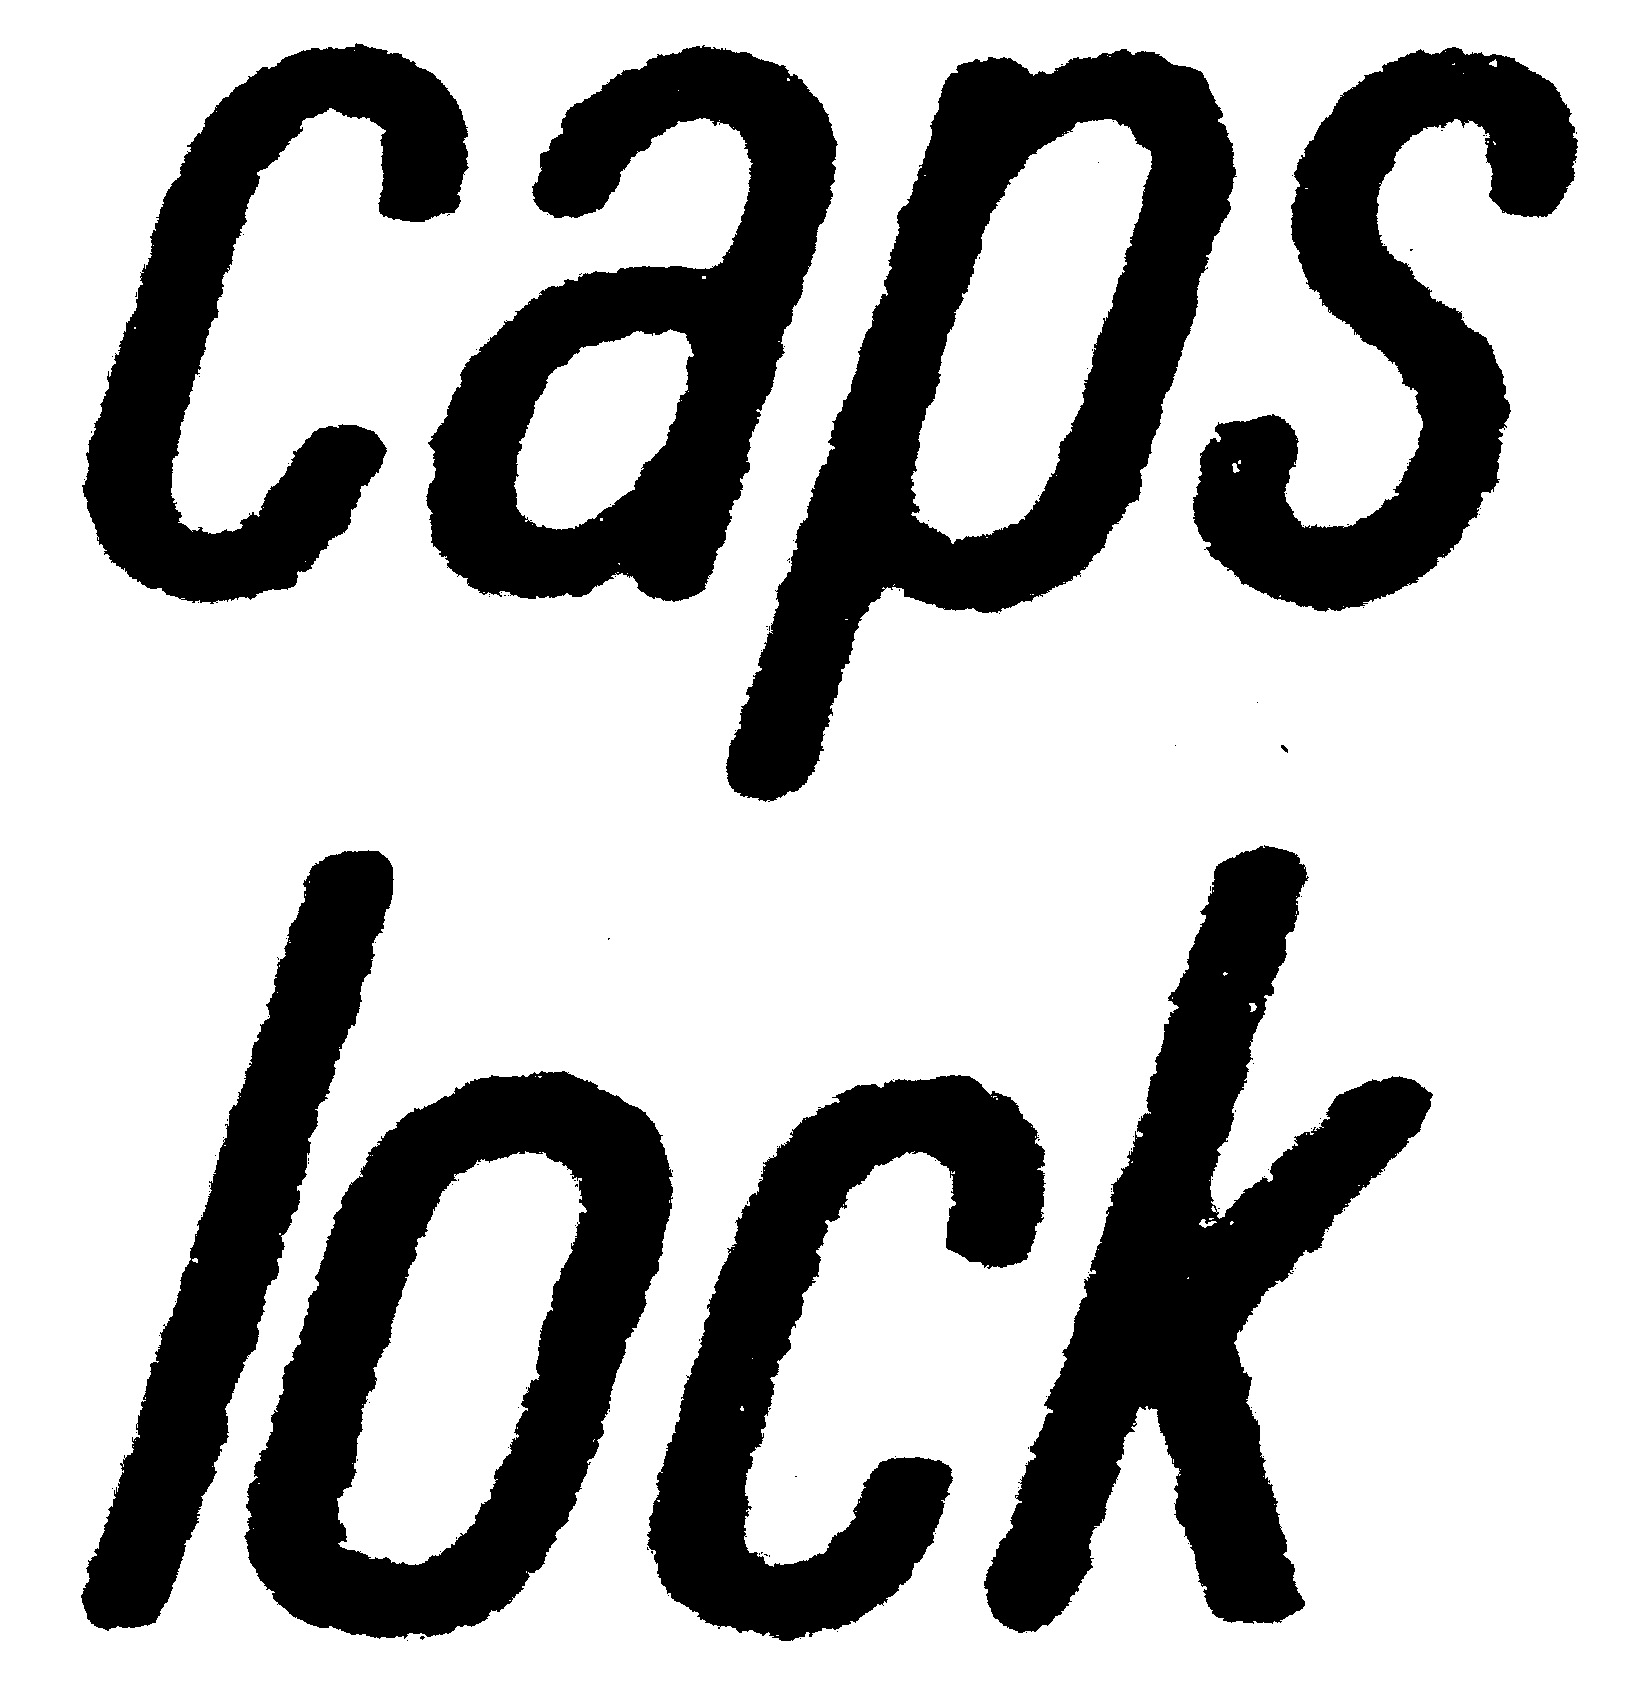 caps lock legend, from AEK I